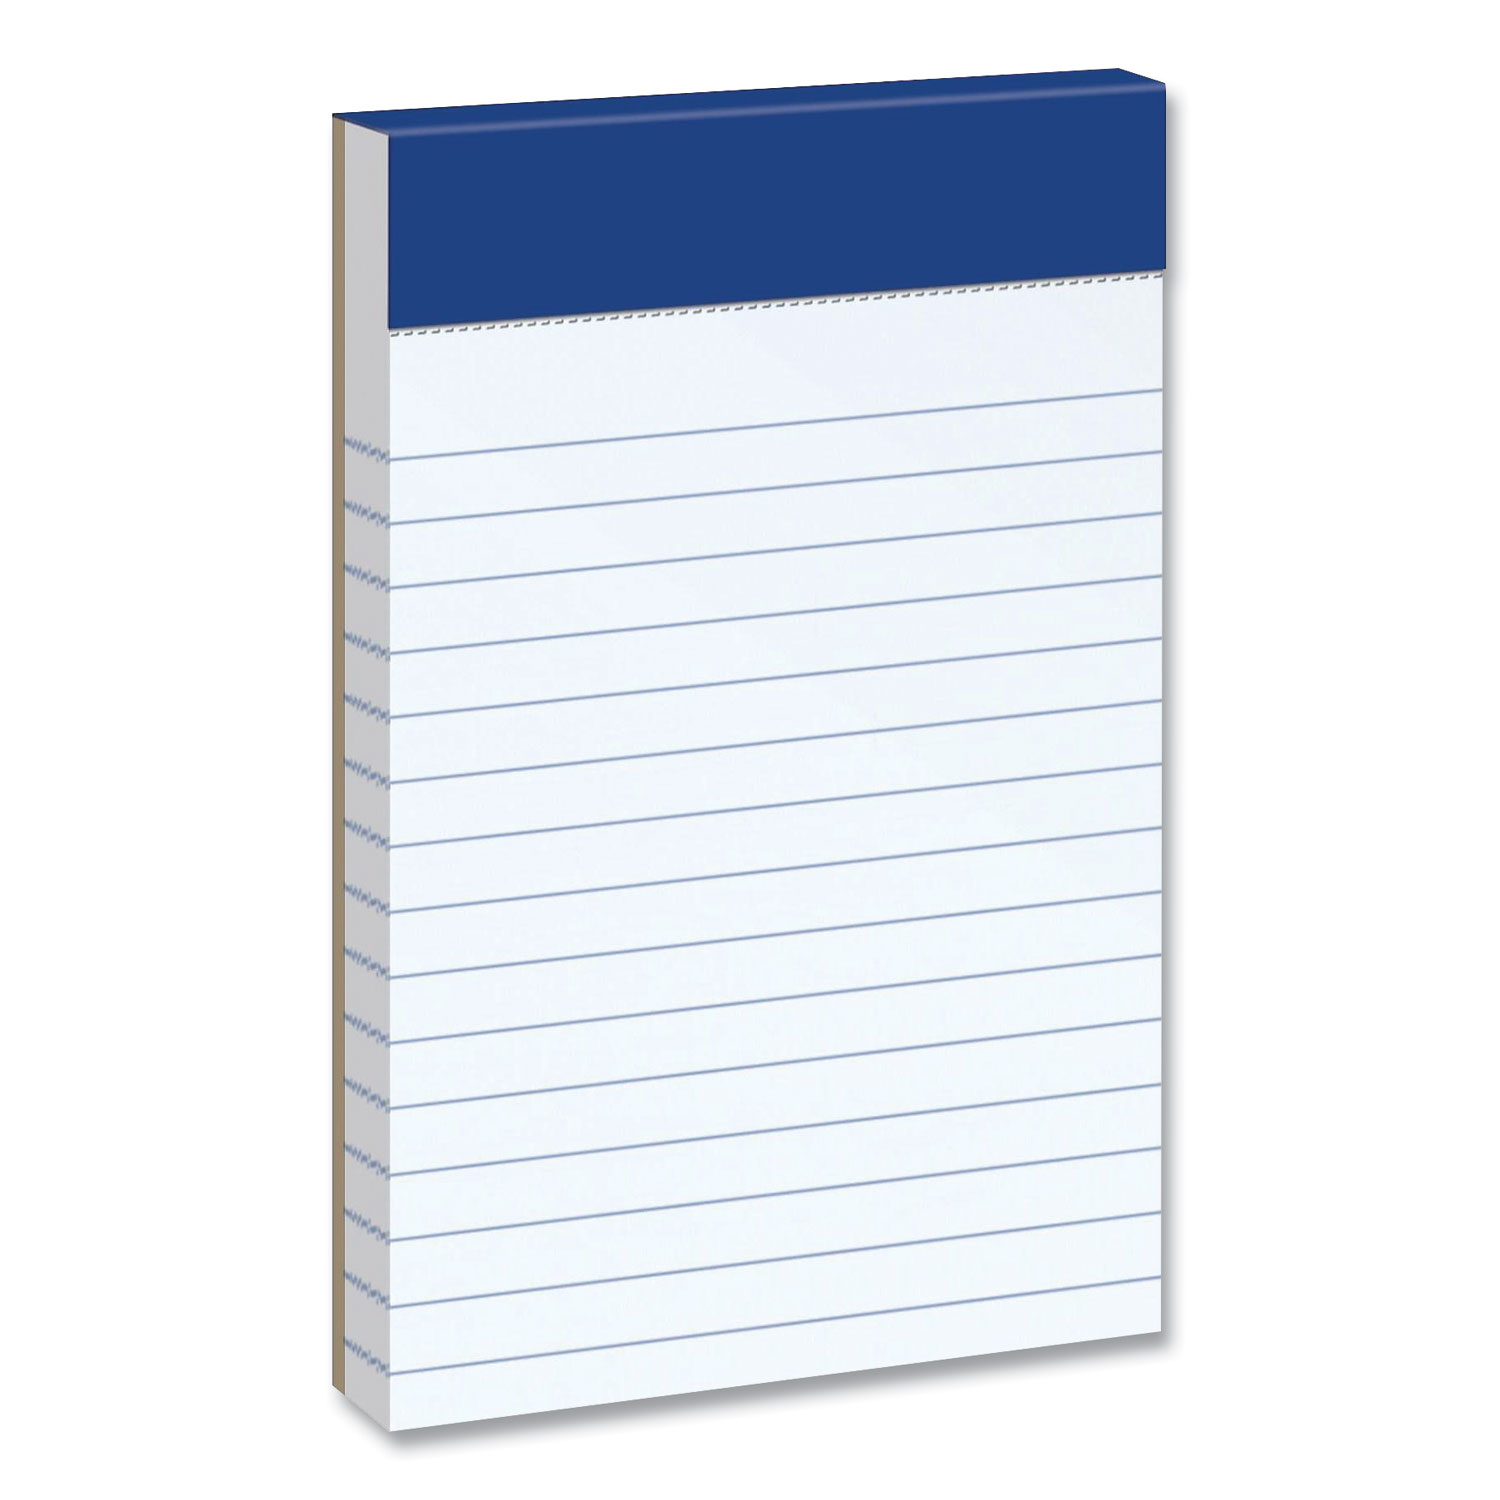  Ampad 20-201 Ruled Writing Pad, Narrow Rule, 3 x 5, 50 White Sheets, 3/Pack (AMP420578) 